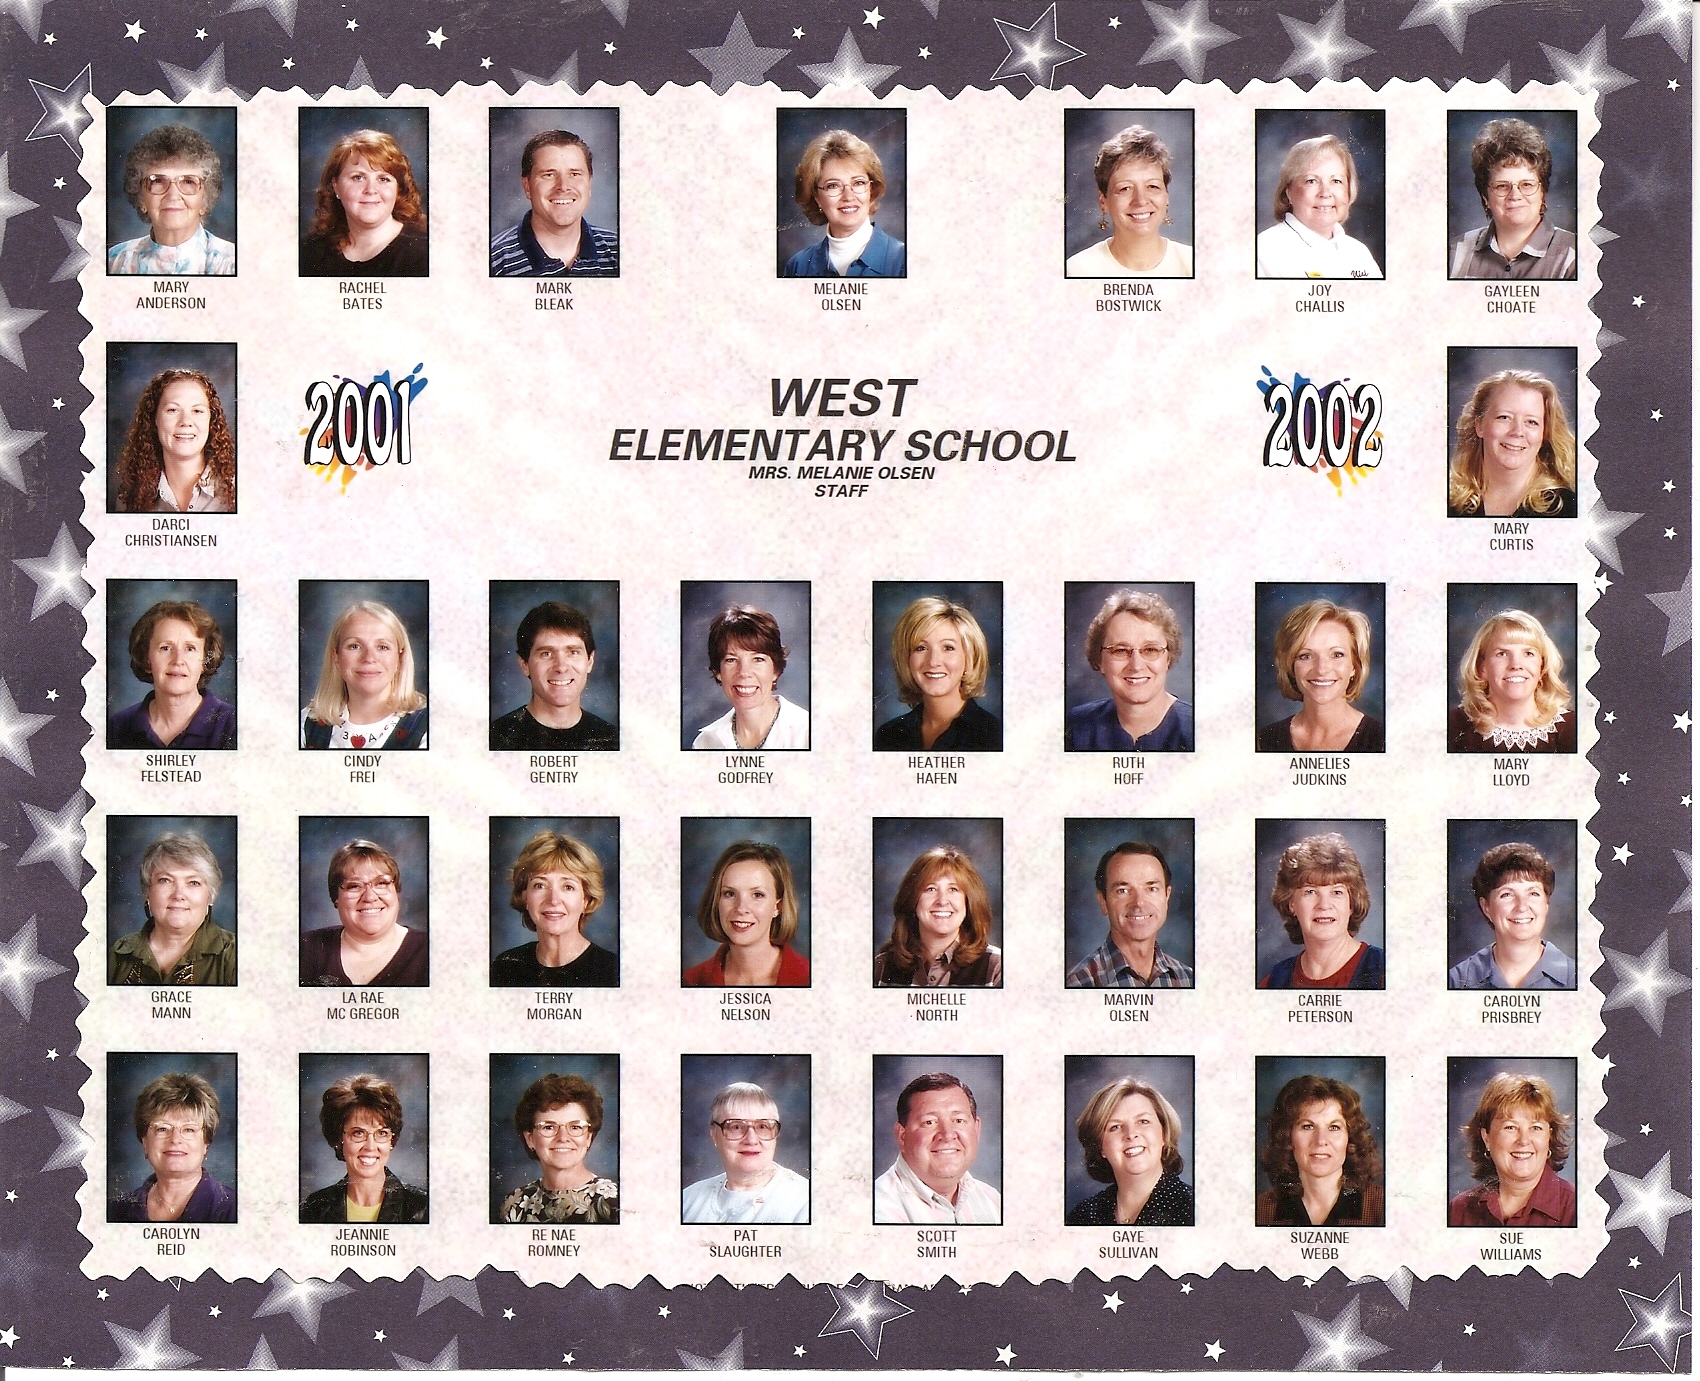 WCHS-00257 West Elementary School 2001-2002 Faculty